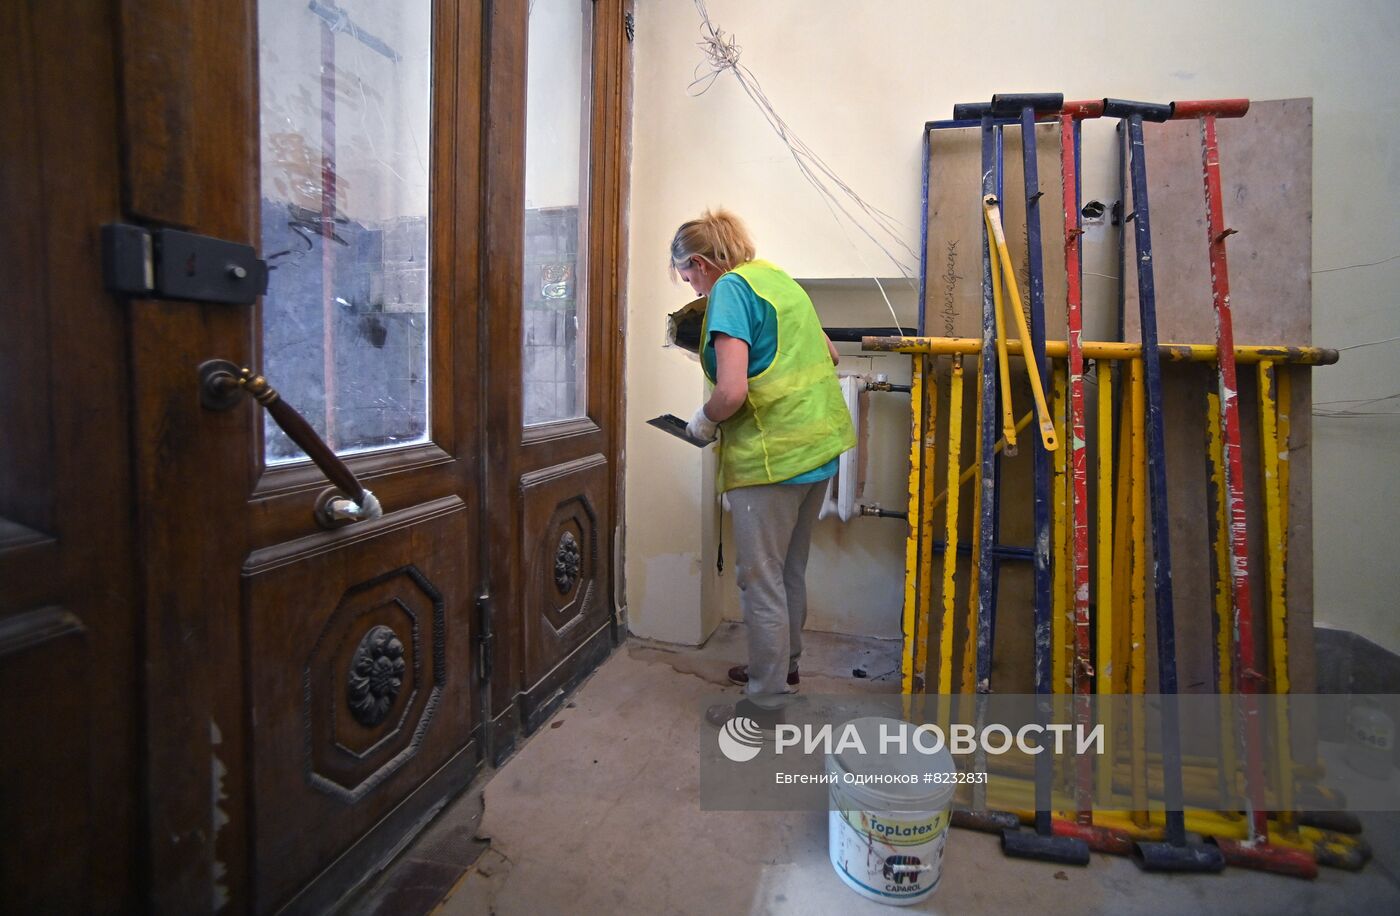 Реставрация театра О. Табакова на Чистых прудах